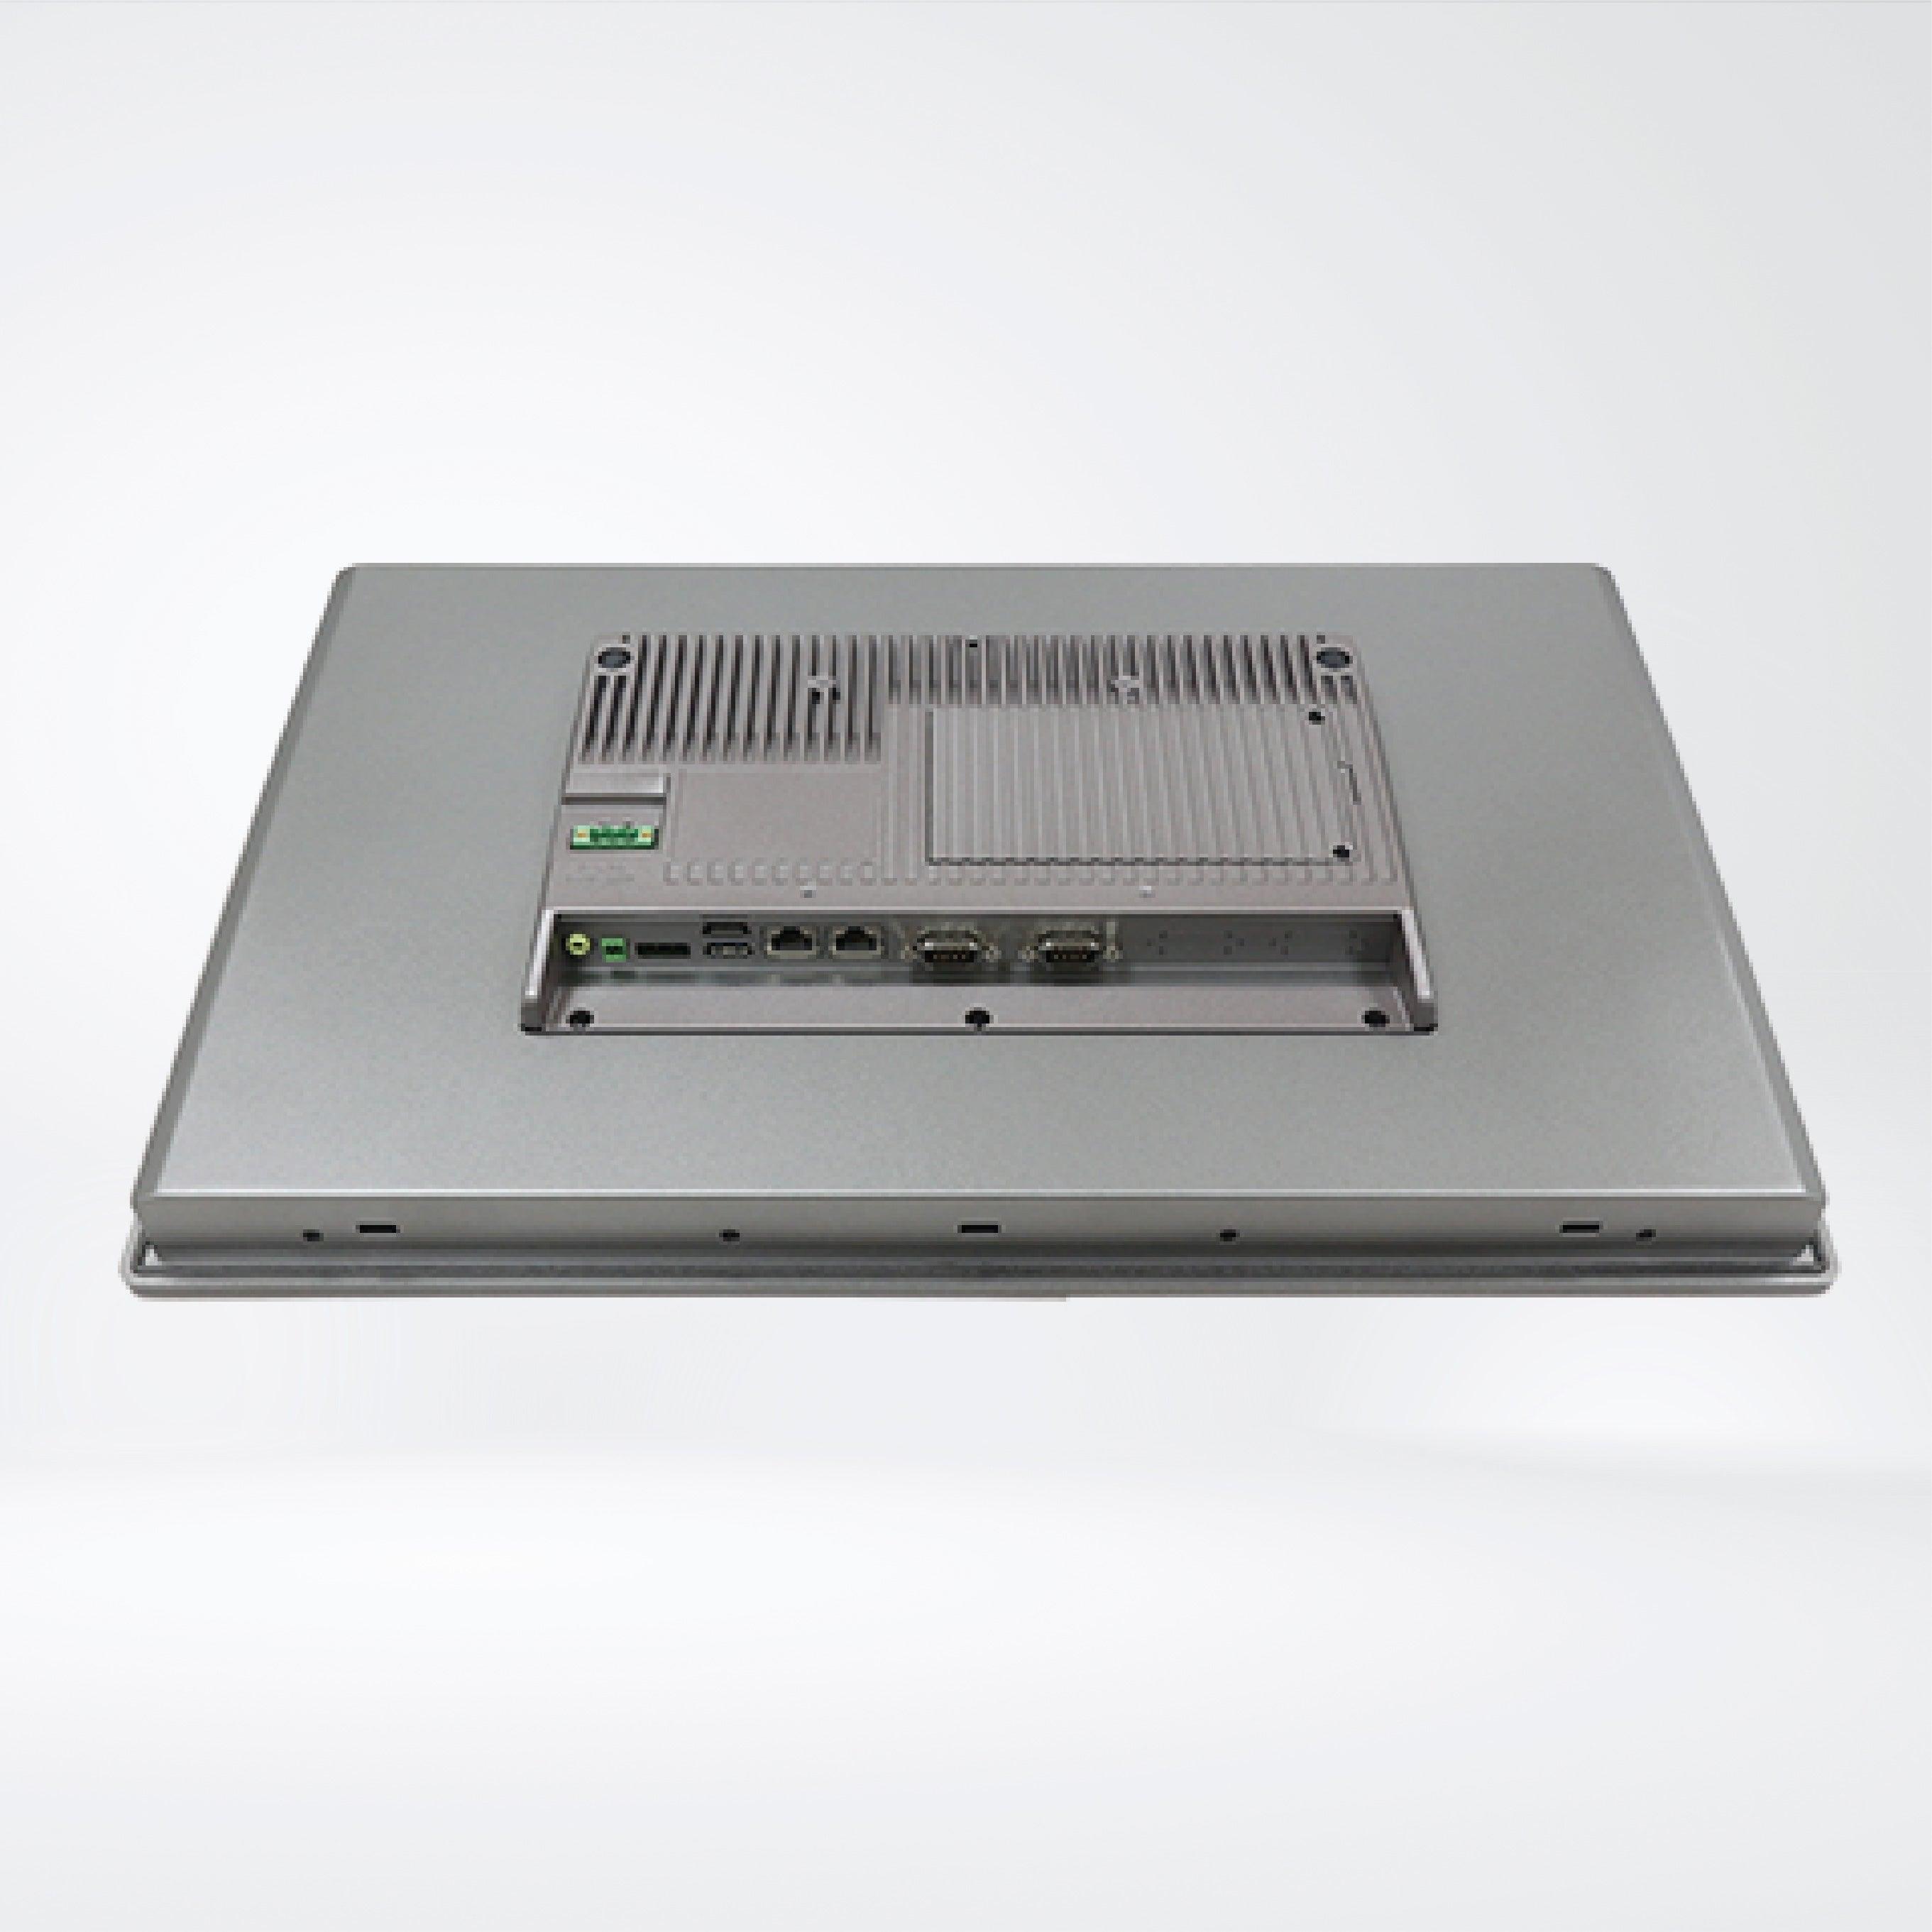 ARCHMI-818PH 18.5" Intel Celeron N2930/ Atom E3845, Fanless Industrial Compact Size Panel PC - Riverplus